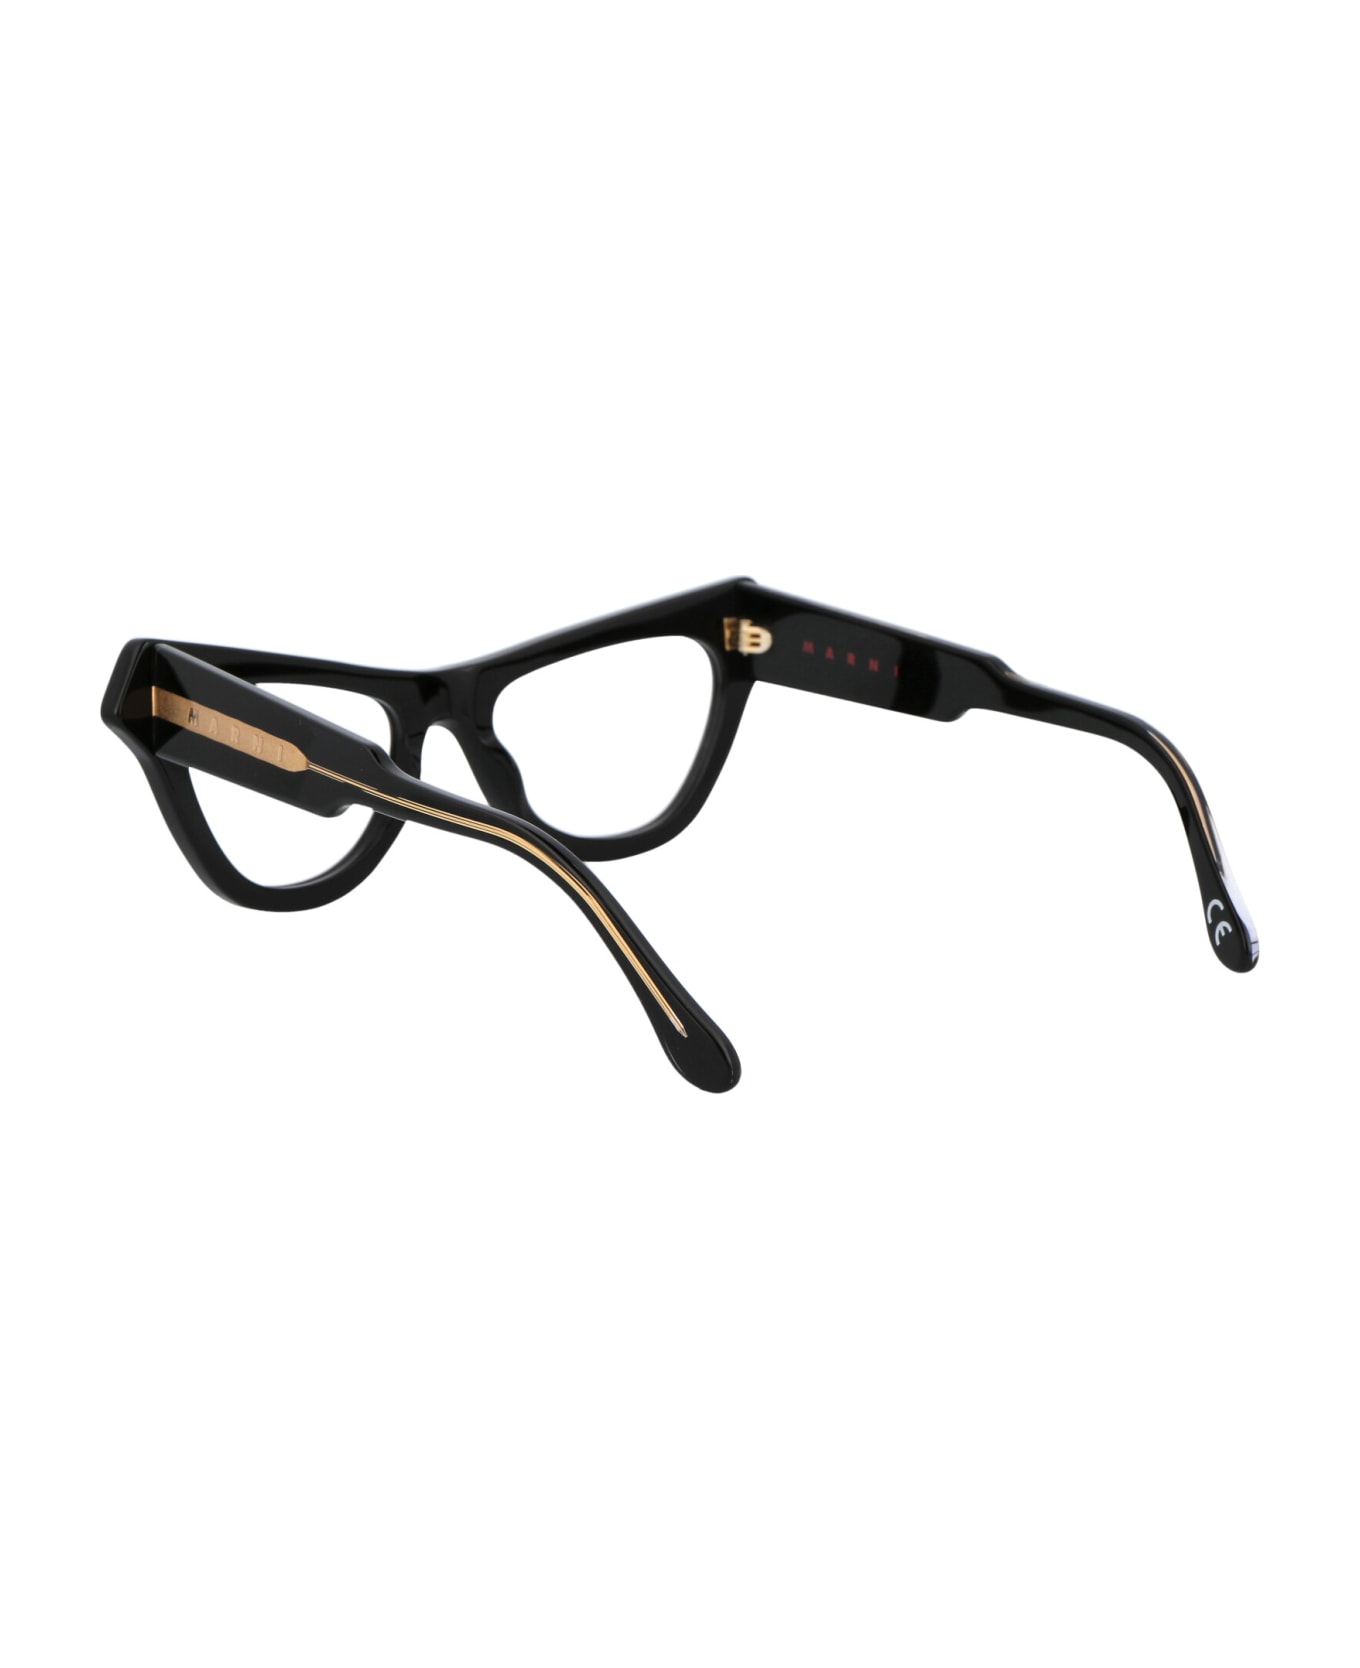 Marni Eyewear Jeju Island Glasses - BLACK